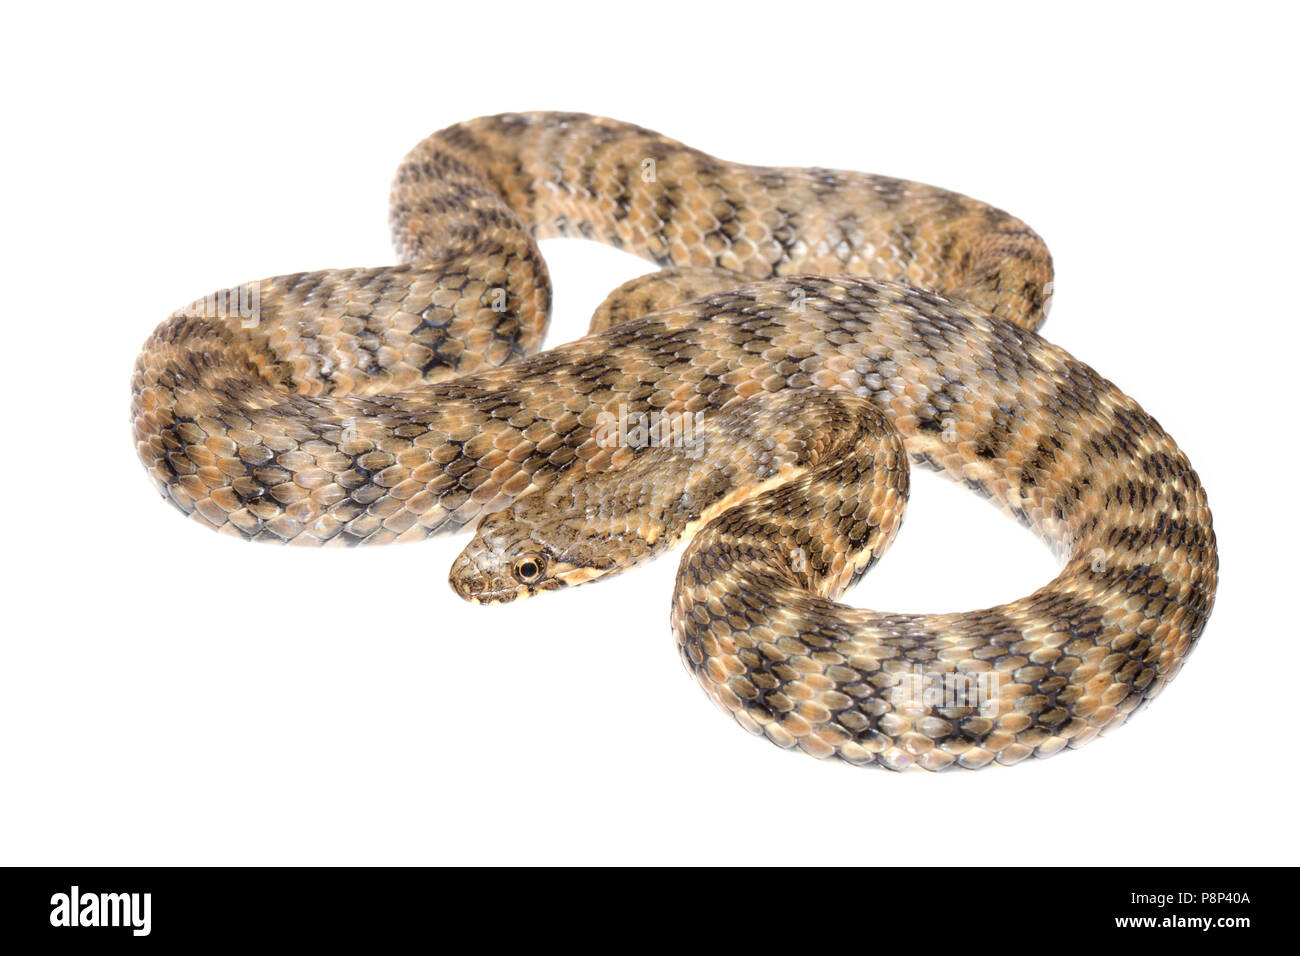 Viperine snake aislado sobre un fondo blanco. Foto de stock